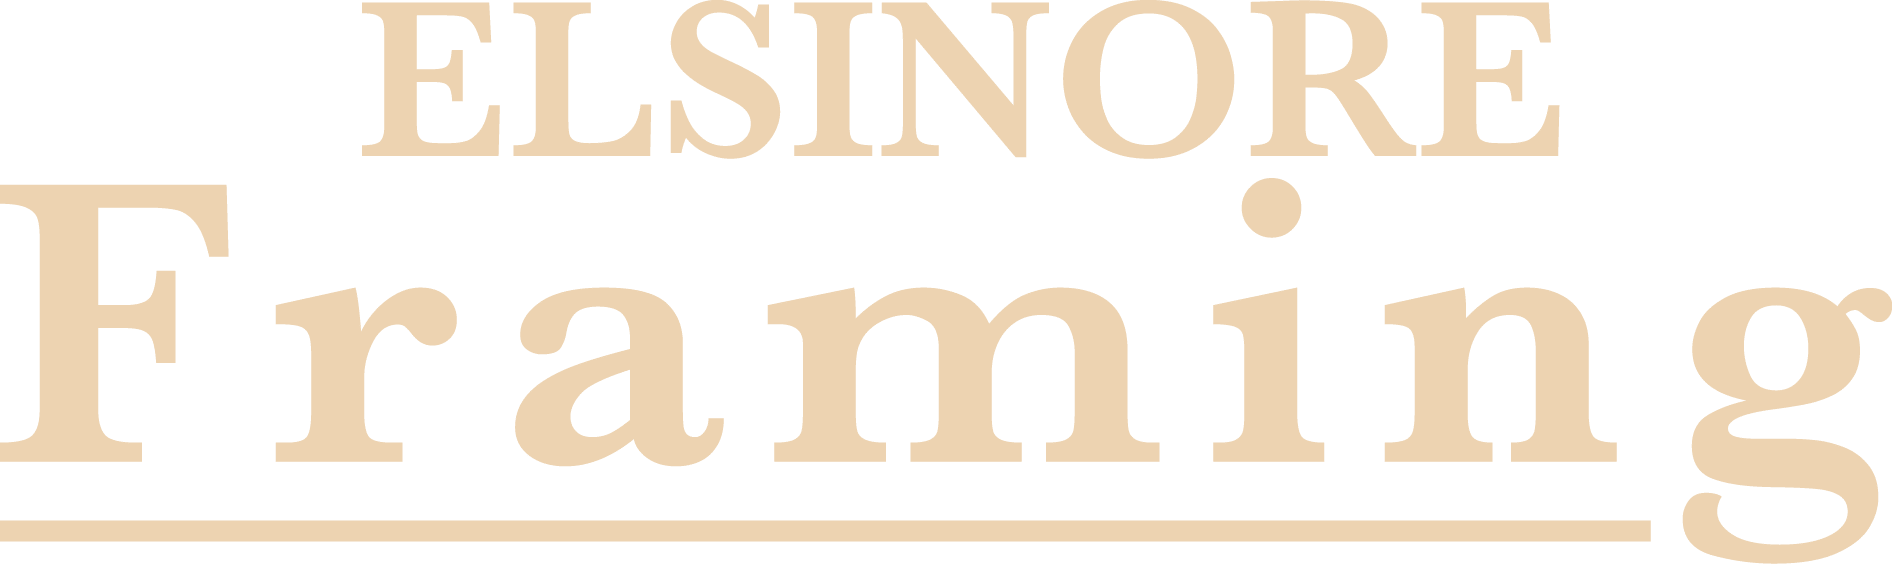 Elsinore Framing in Salem OR Logo